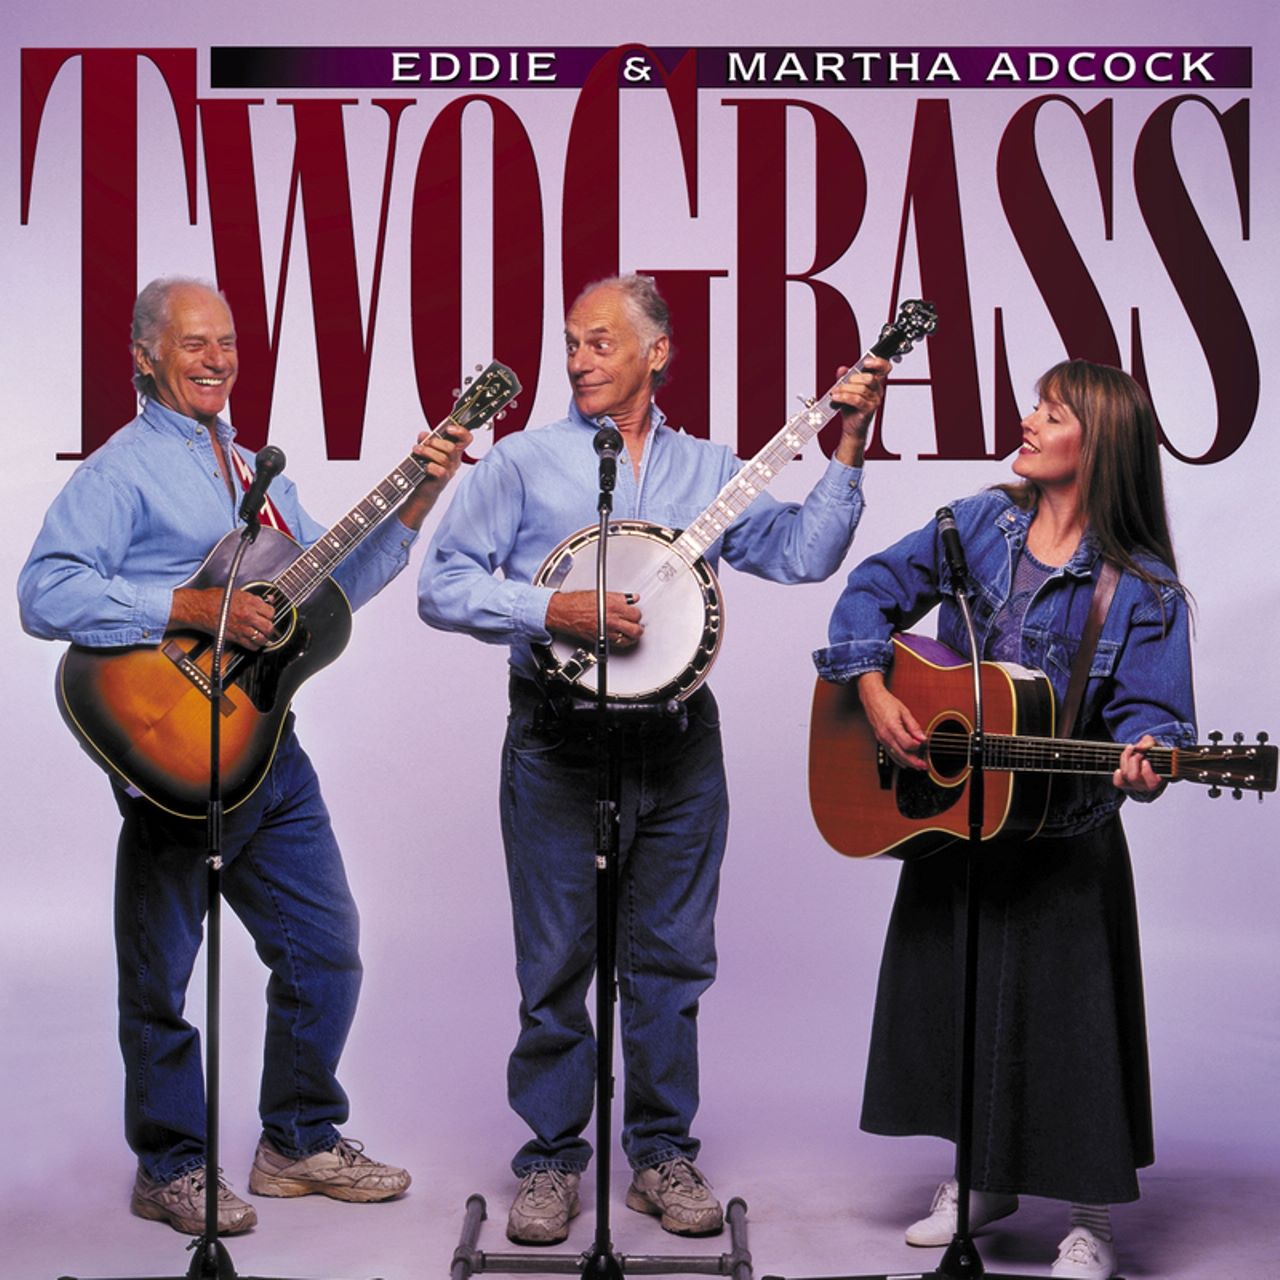 Eddie & Martha Adcock - Twograss cover album